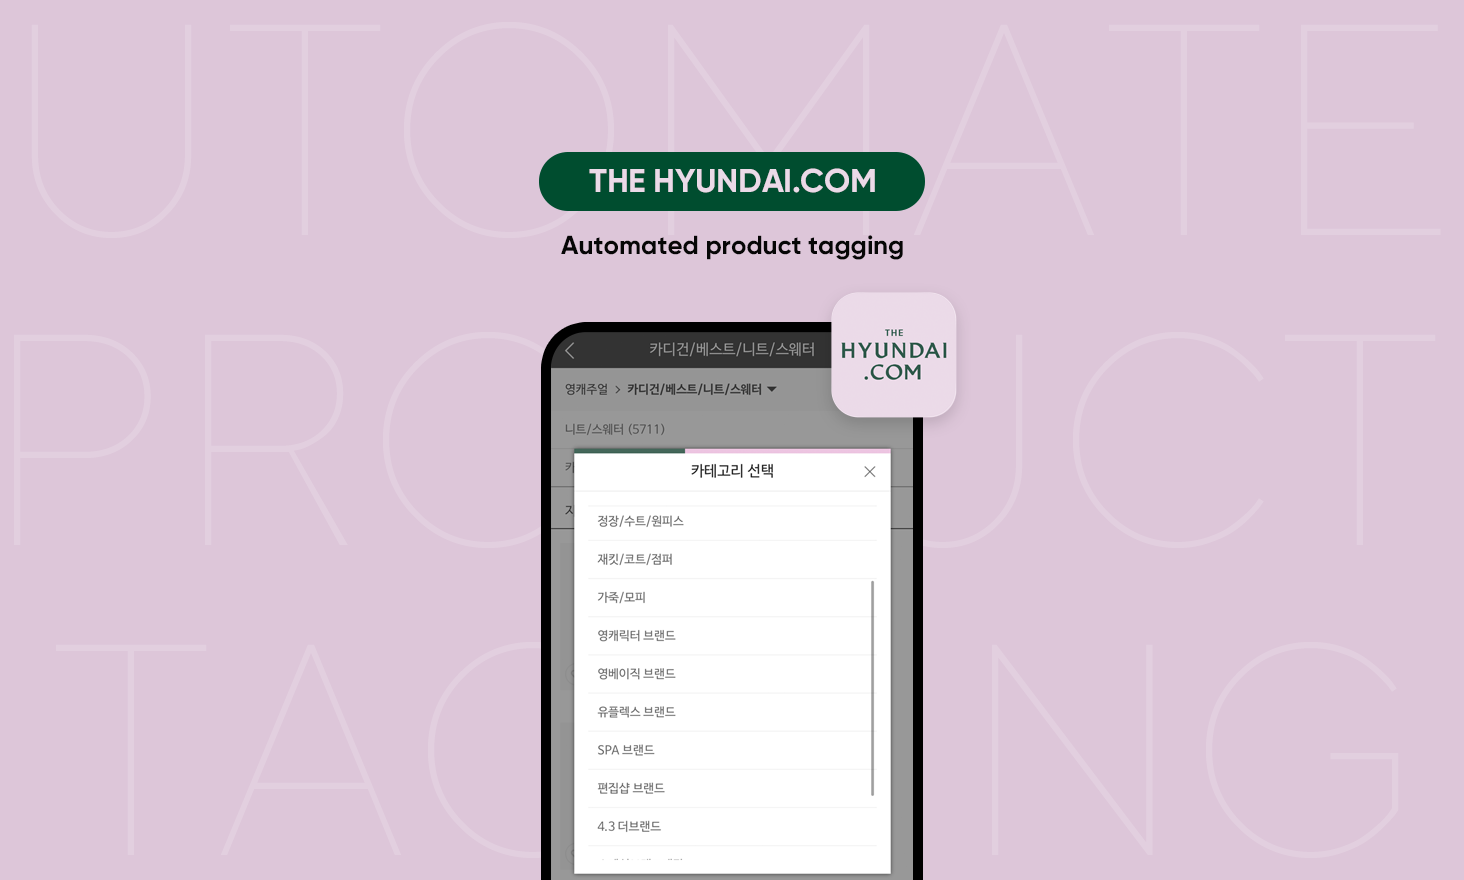 The Hyundai.com’s successful promotion with AI-enhanced data technology!